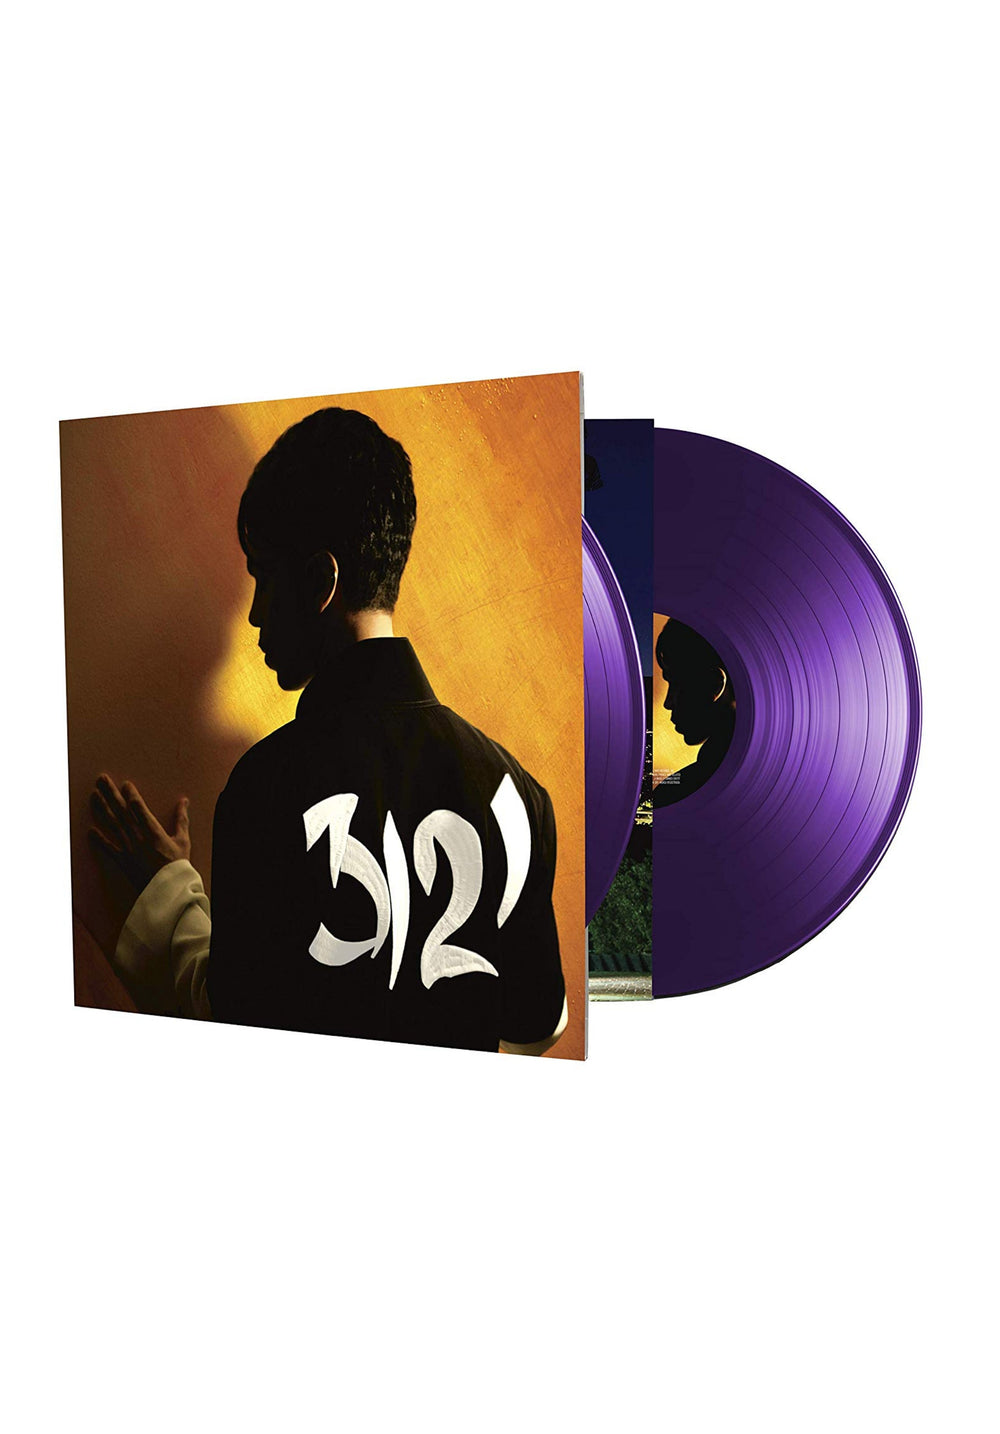 Prince – 3121 LP Album x 2 Limited Edition Purple Vinyl Release Sony Legacy NEW 2019